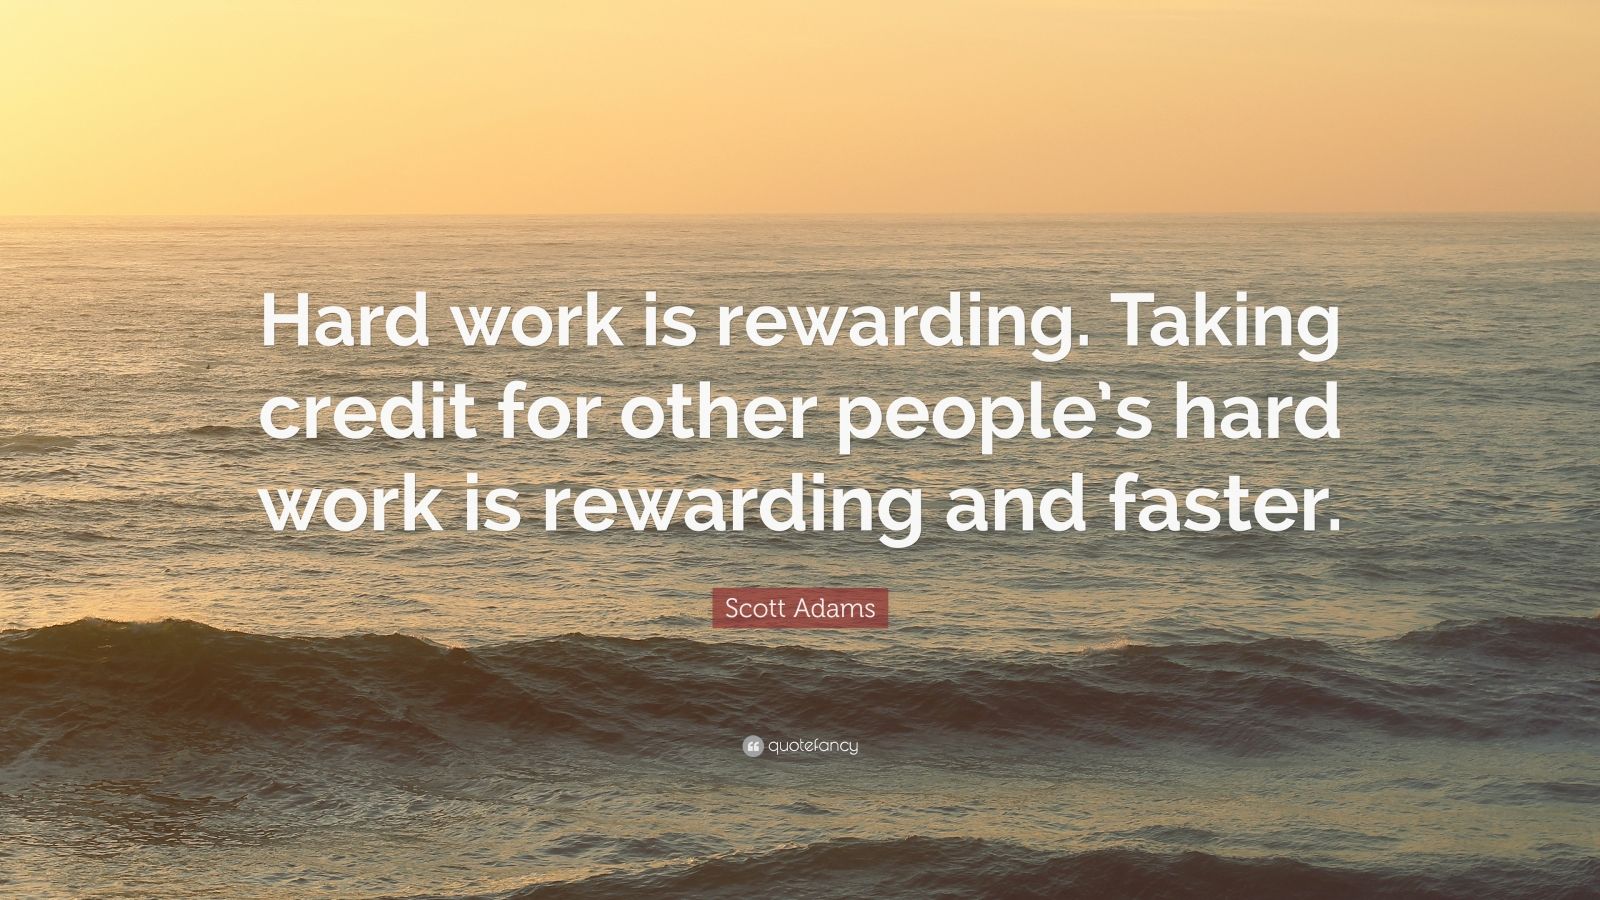 Scott Adams Quote: “Hard work is rewarding. Taking credit for other ...